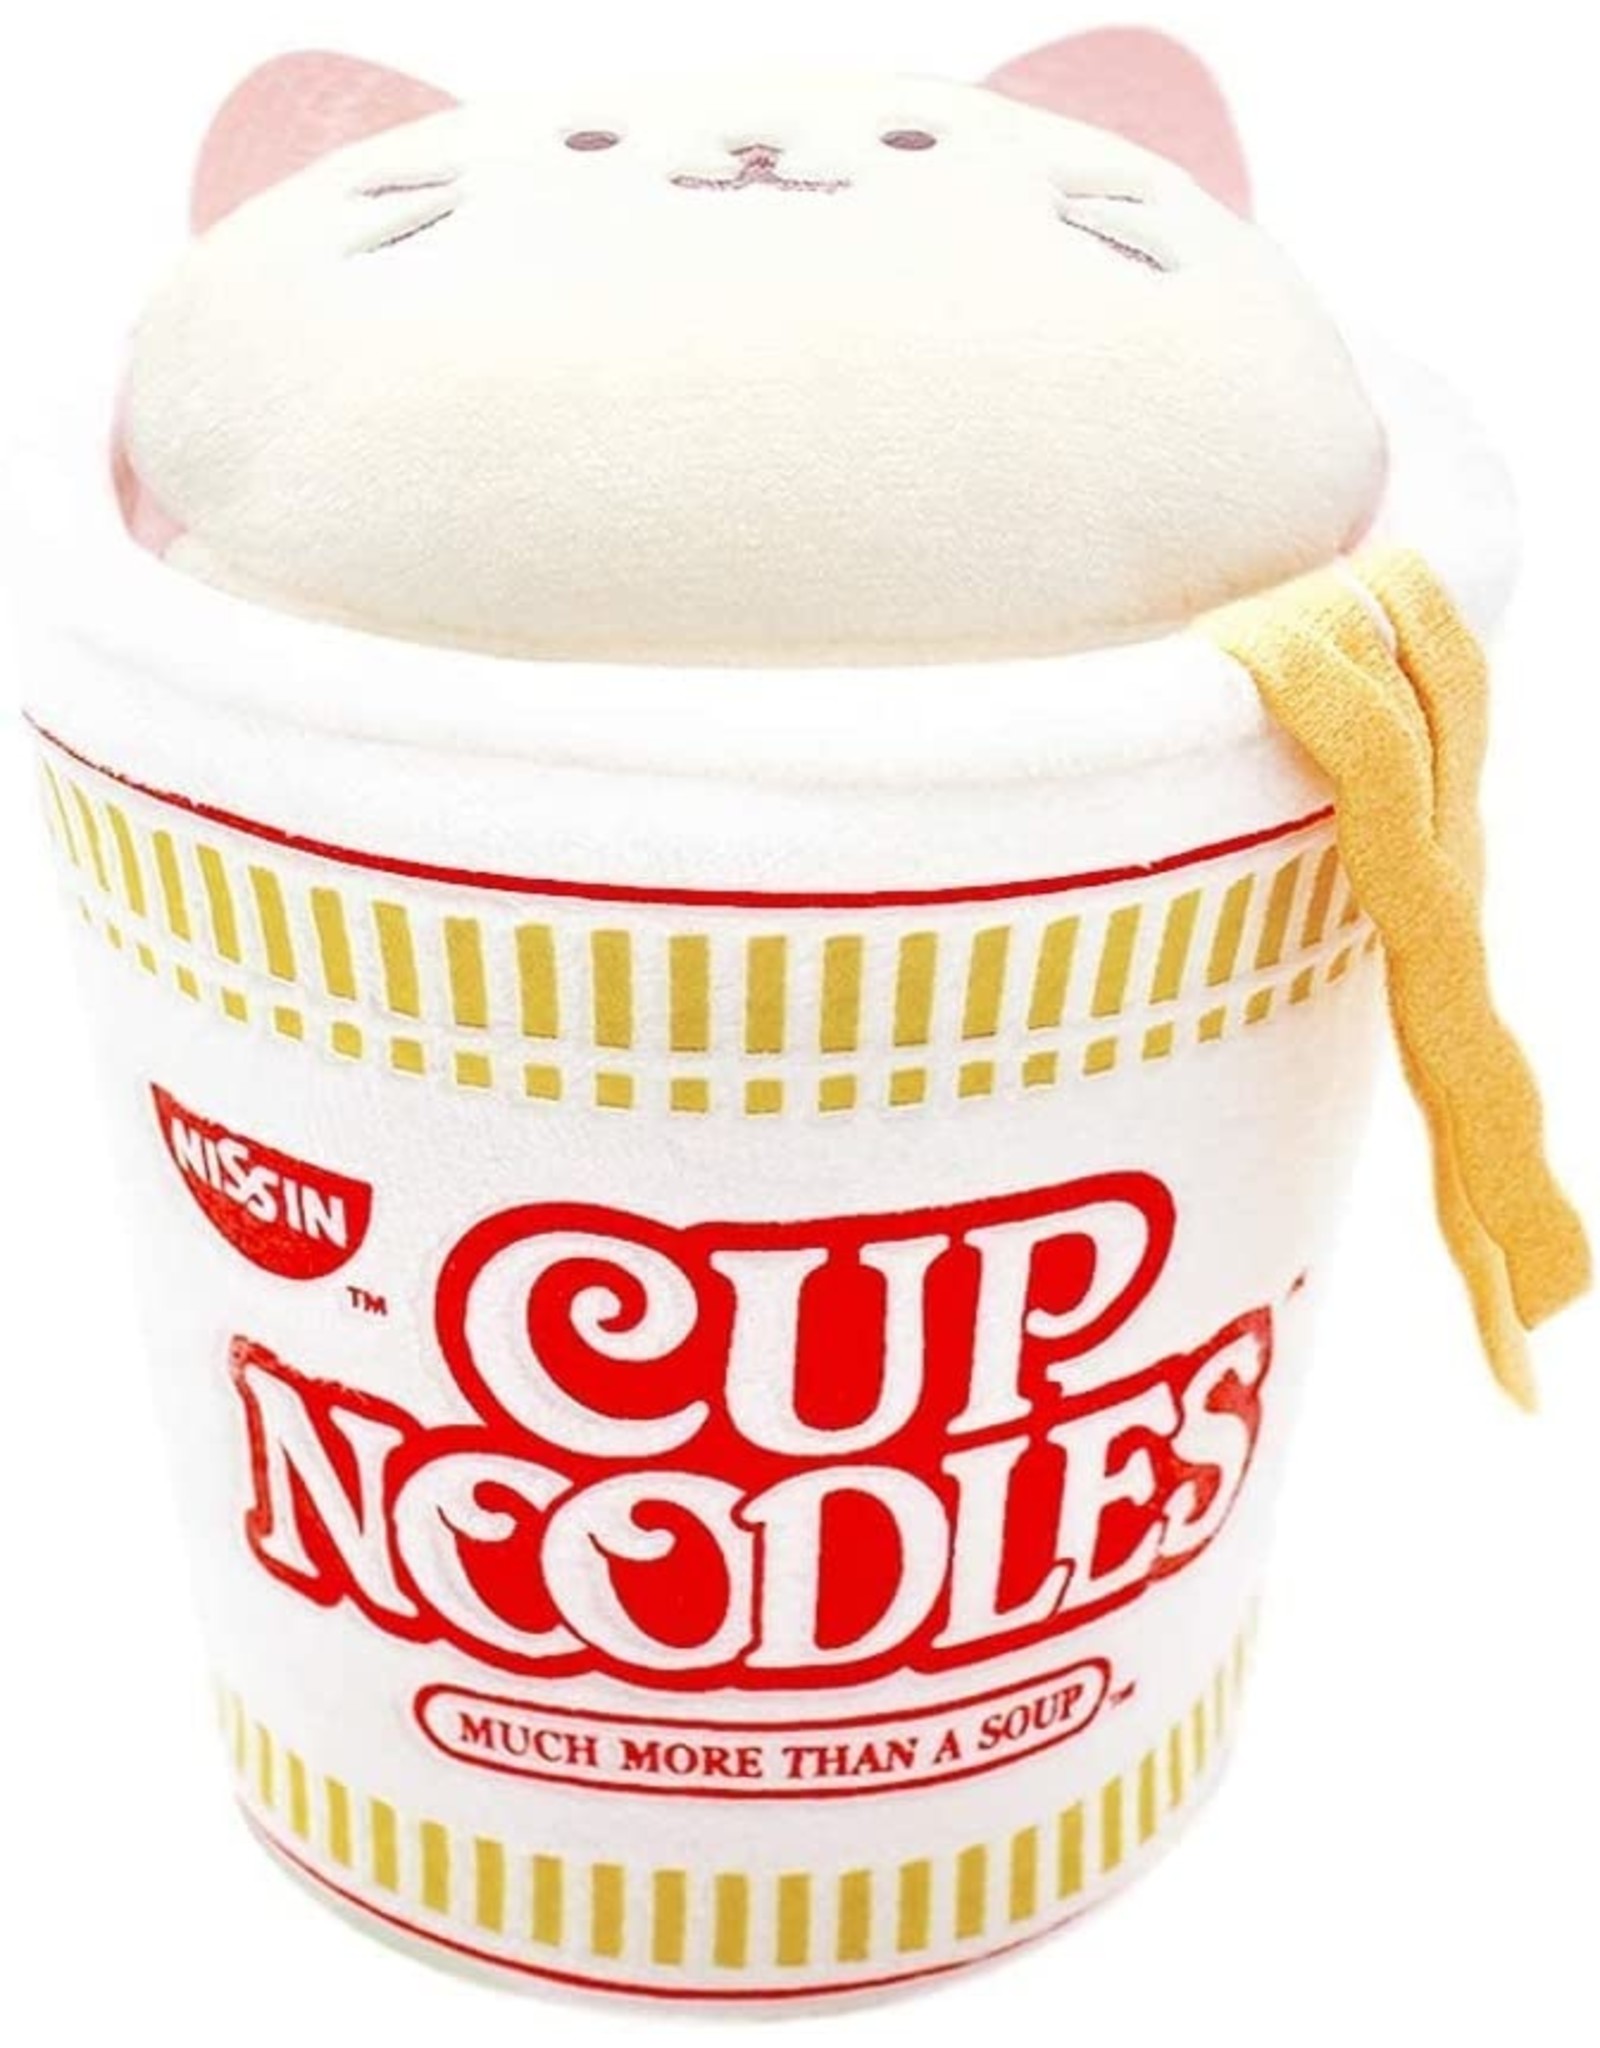 Anirollz x Cup Noodles Kittiroll Blanket Plush Small